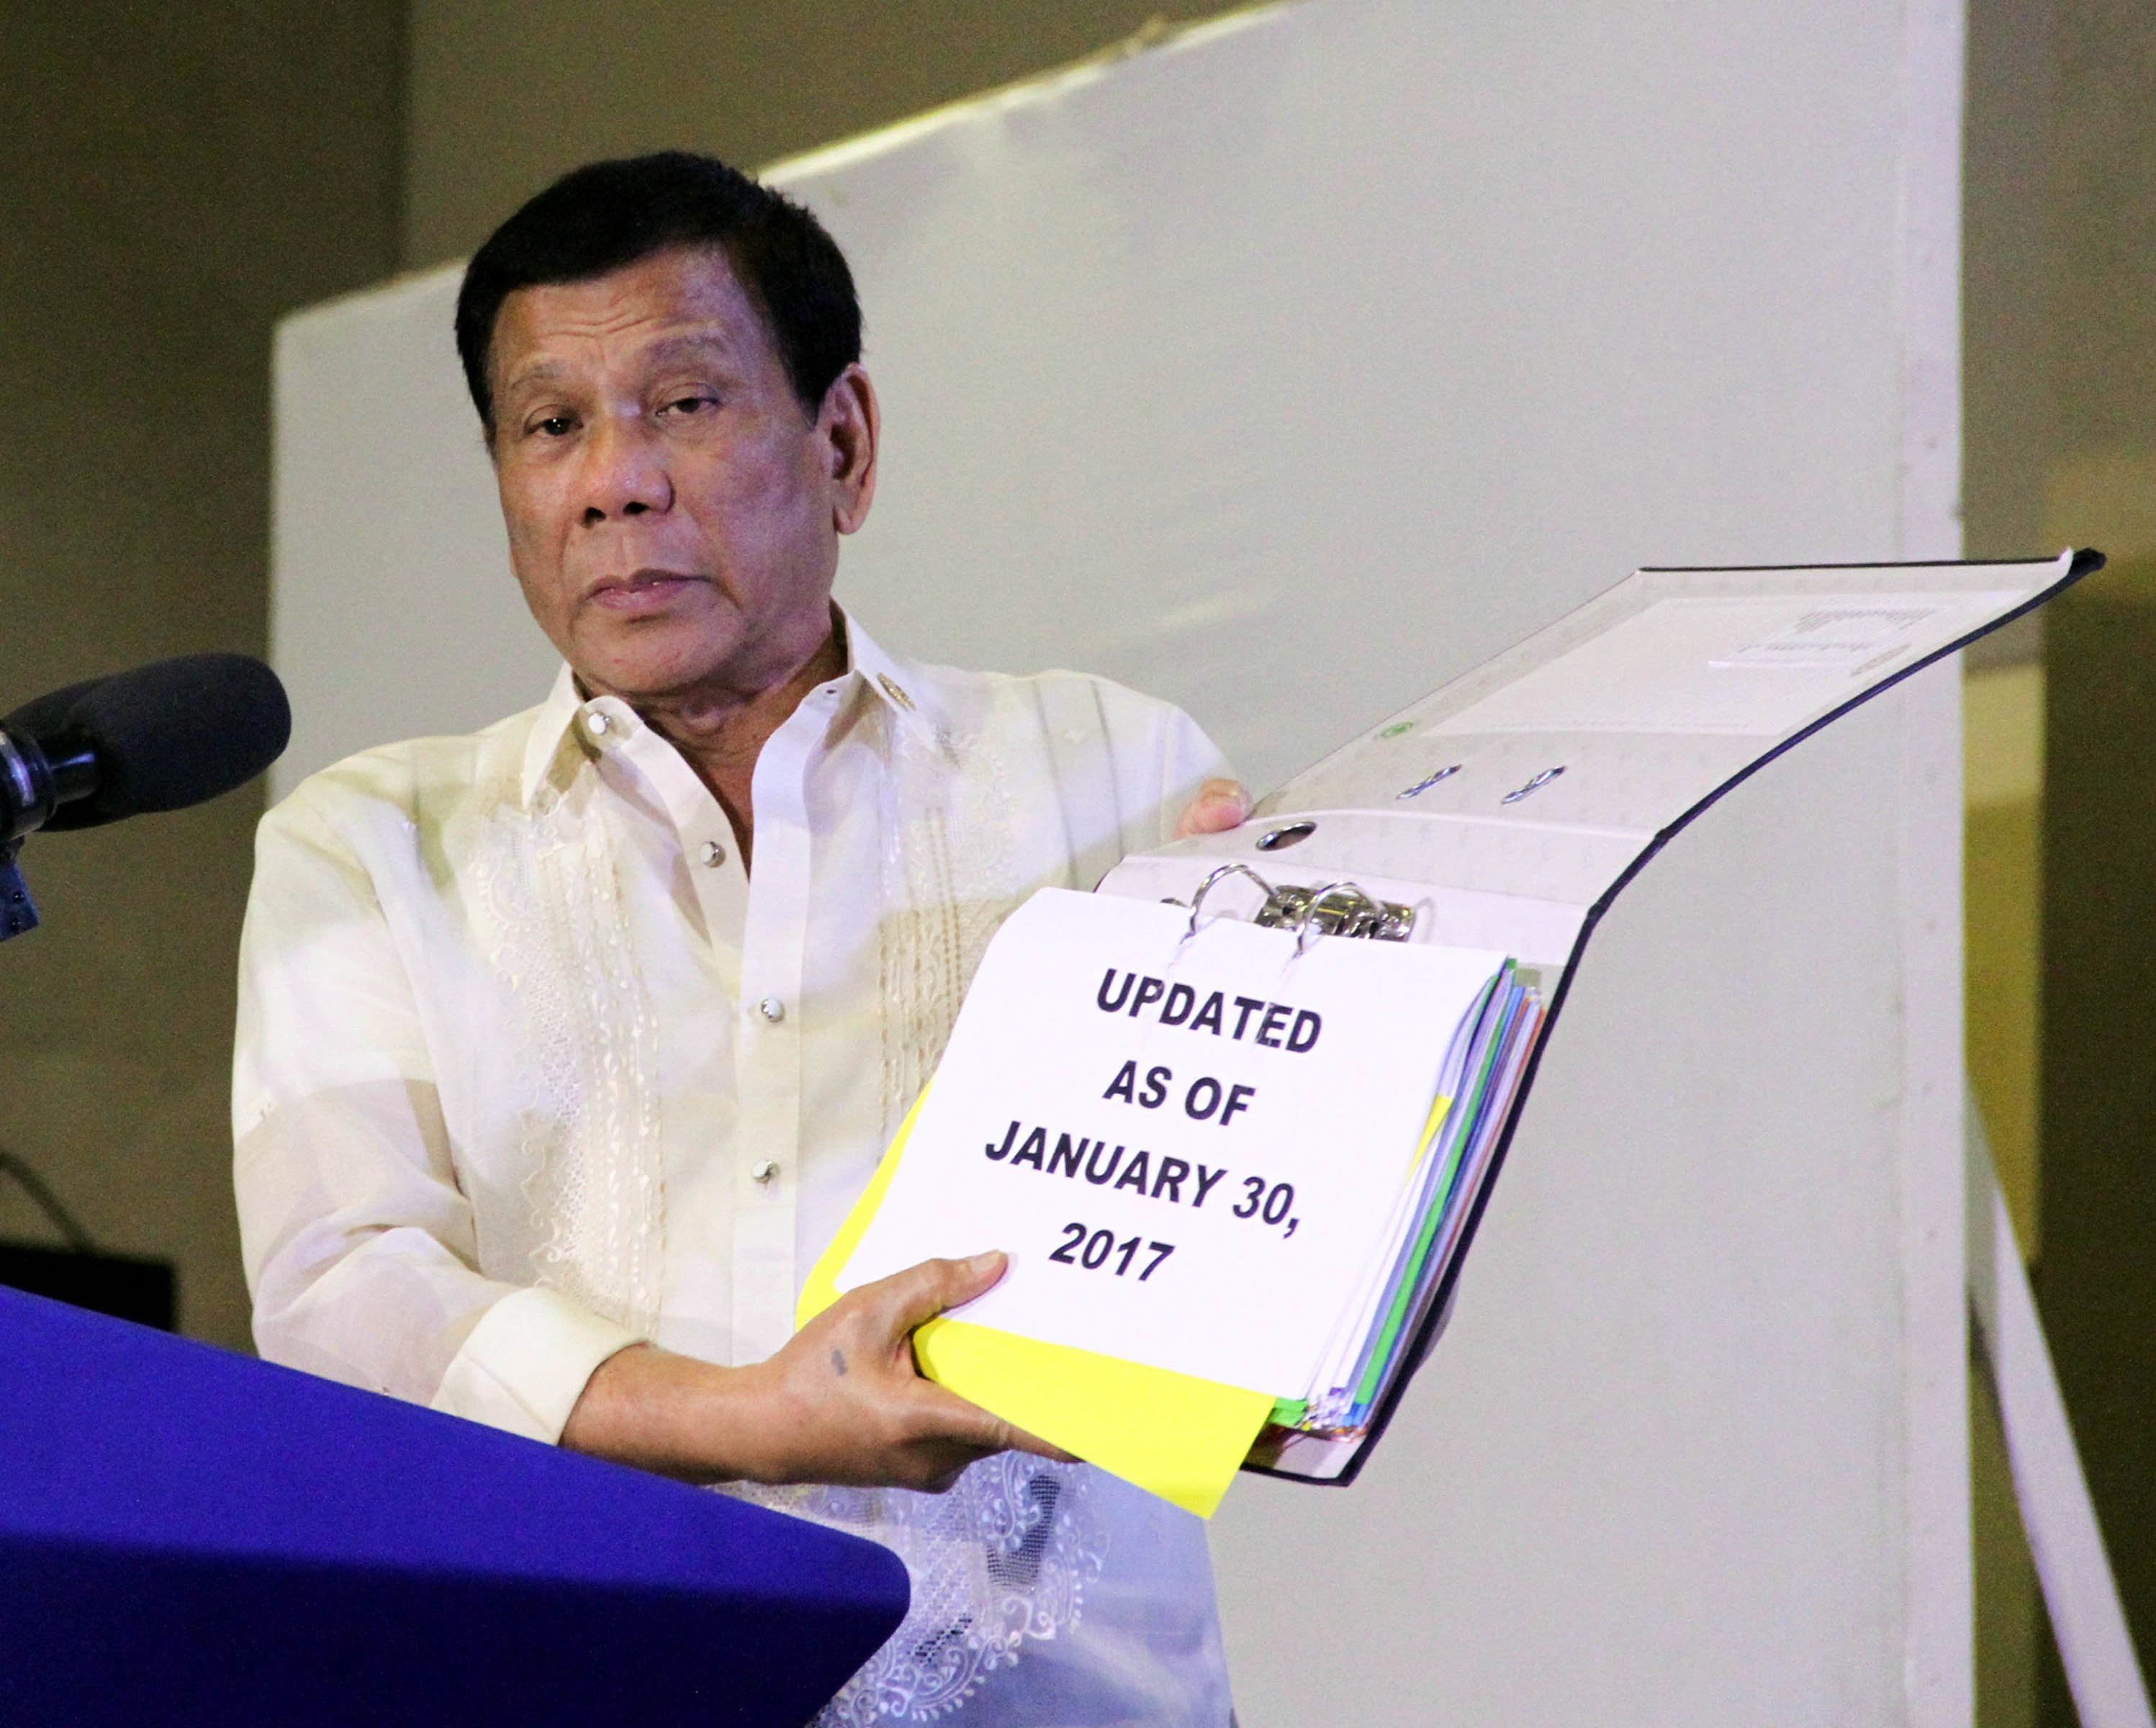 Pres. Duterte's updated drug list